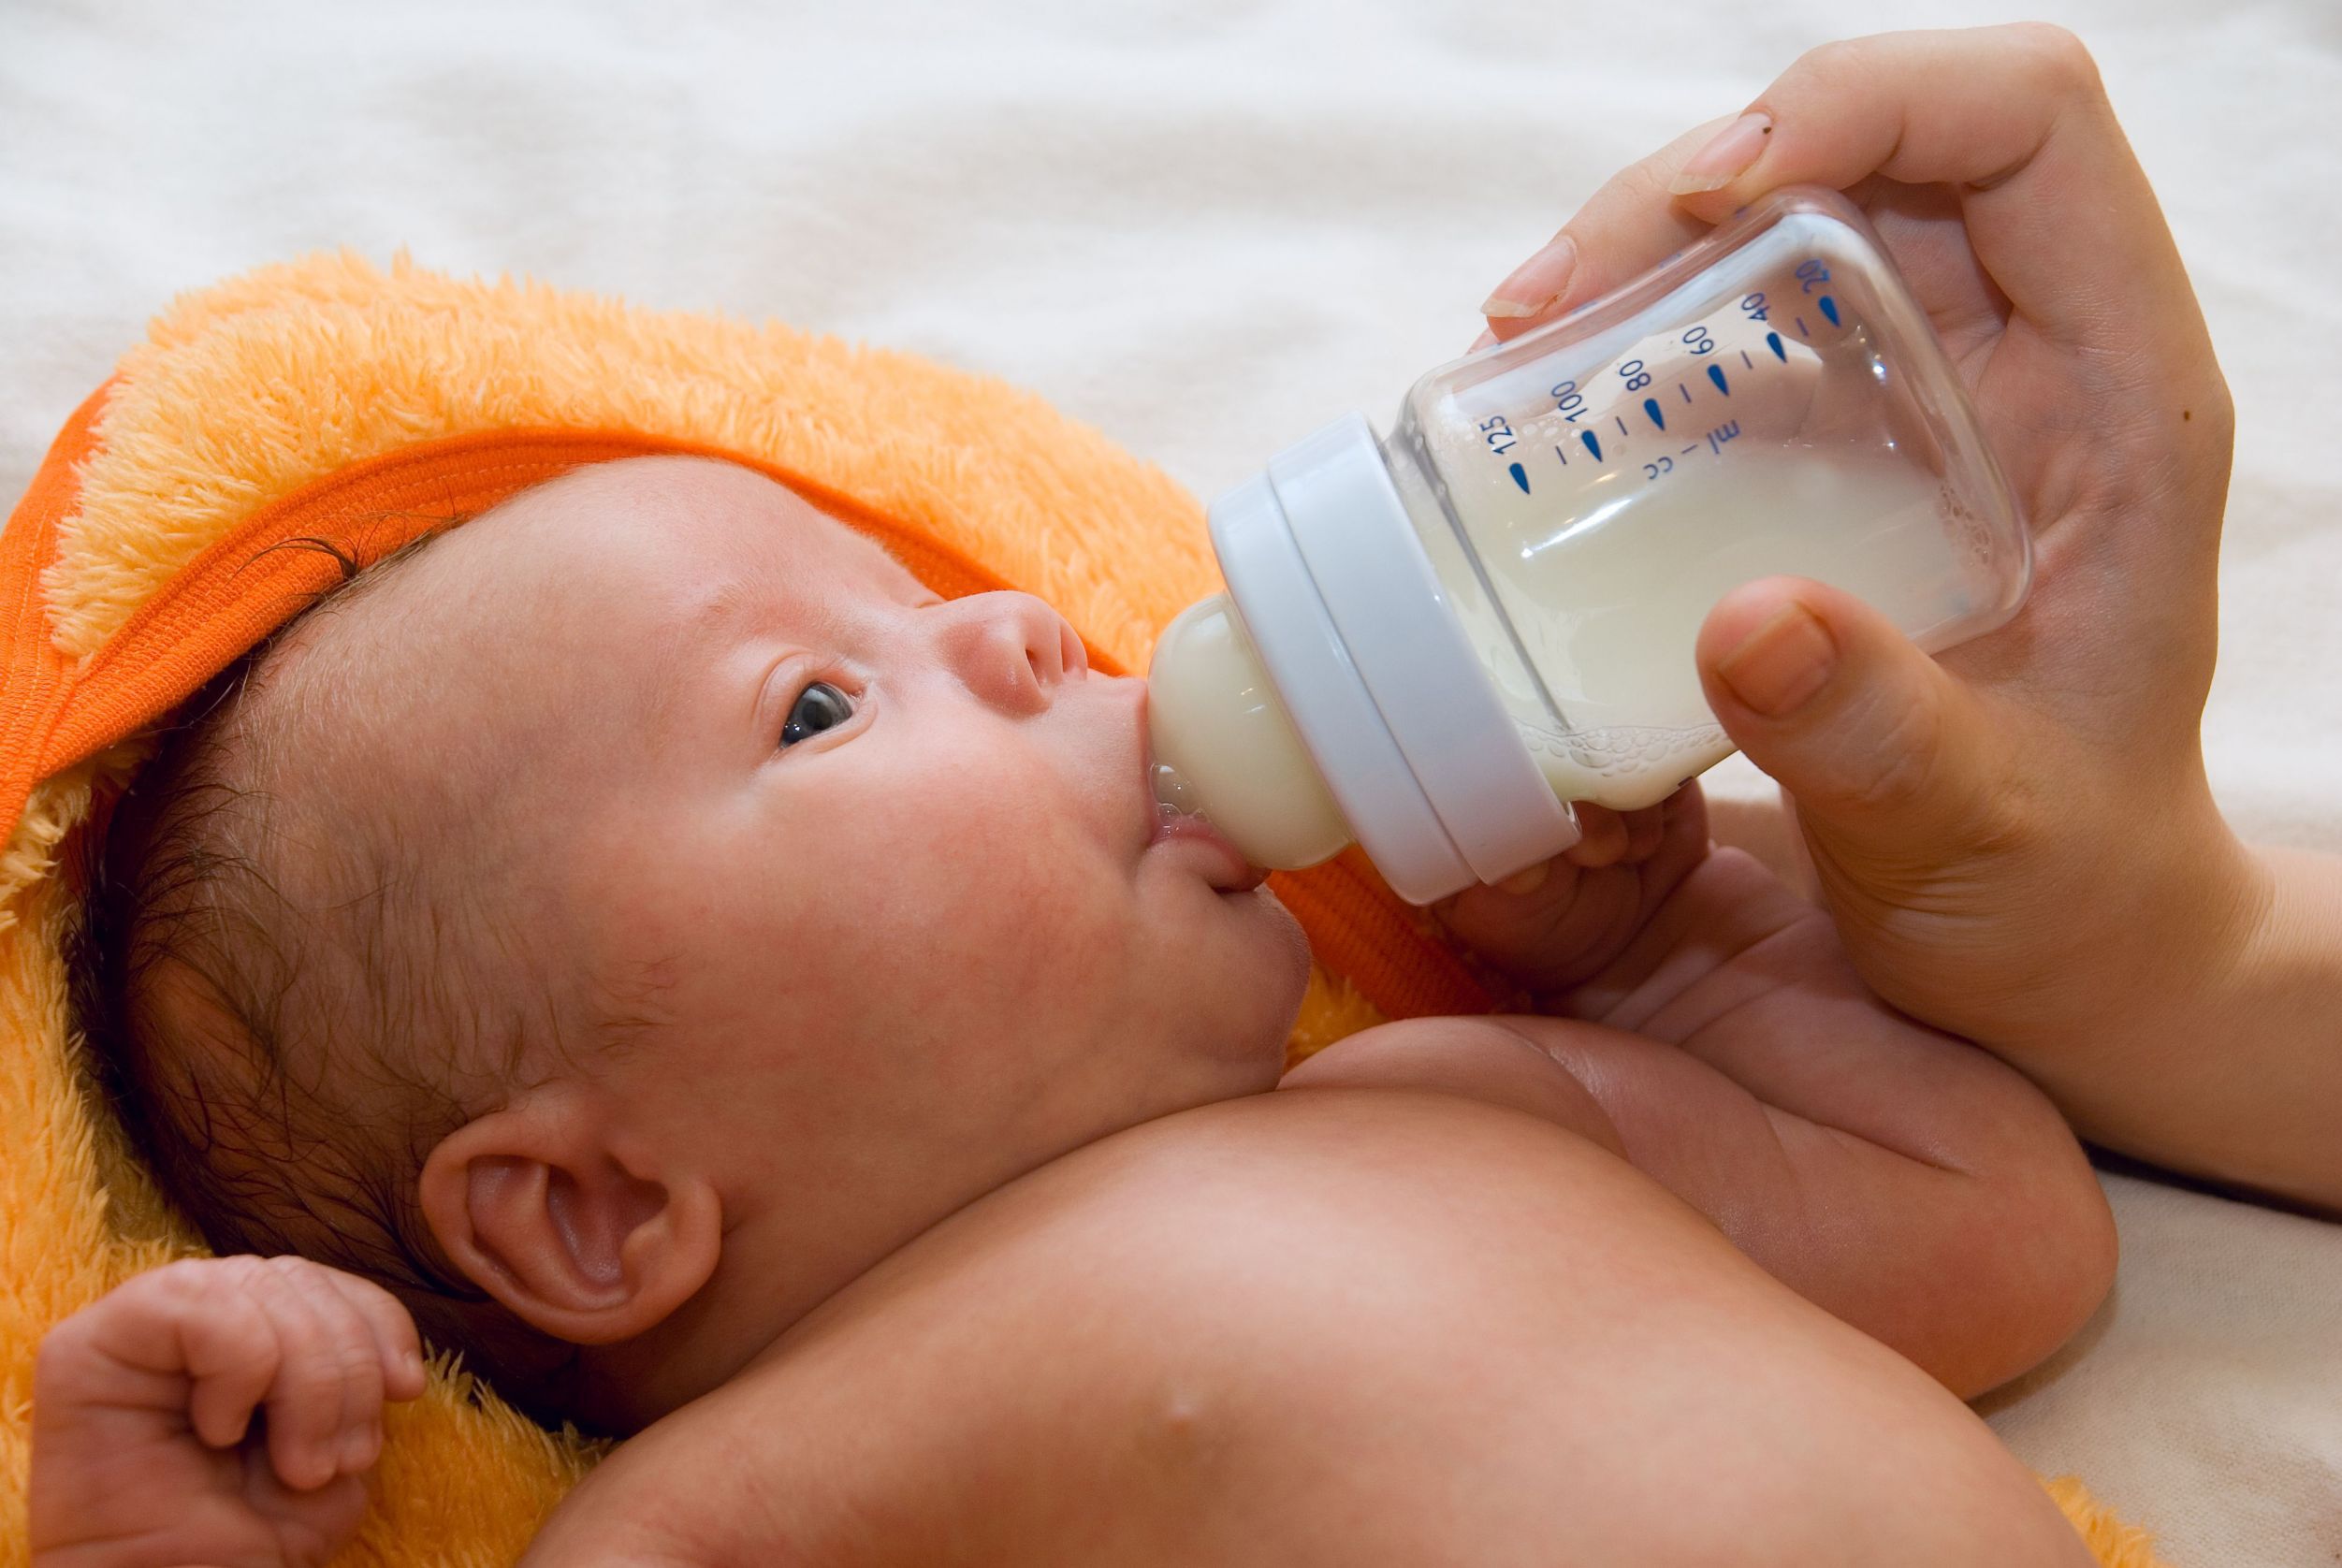 Cómo almacenar la leche materna - Salud